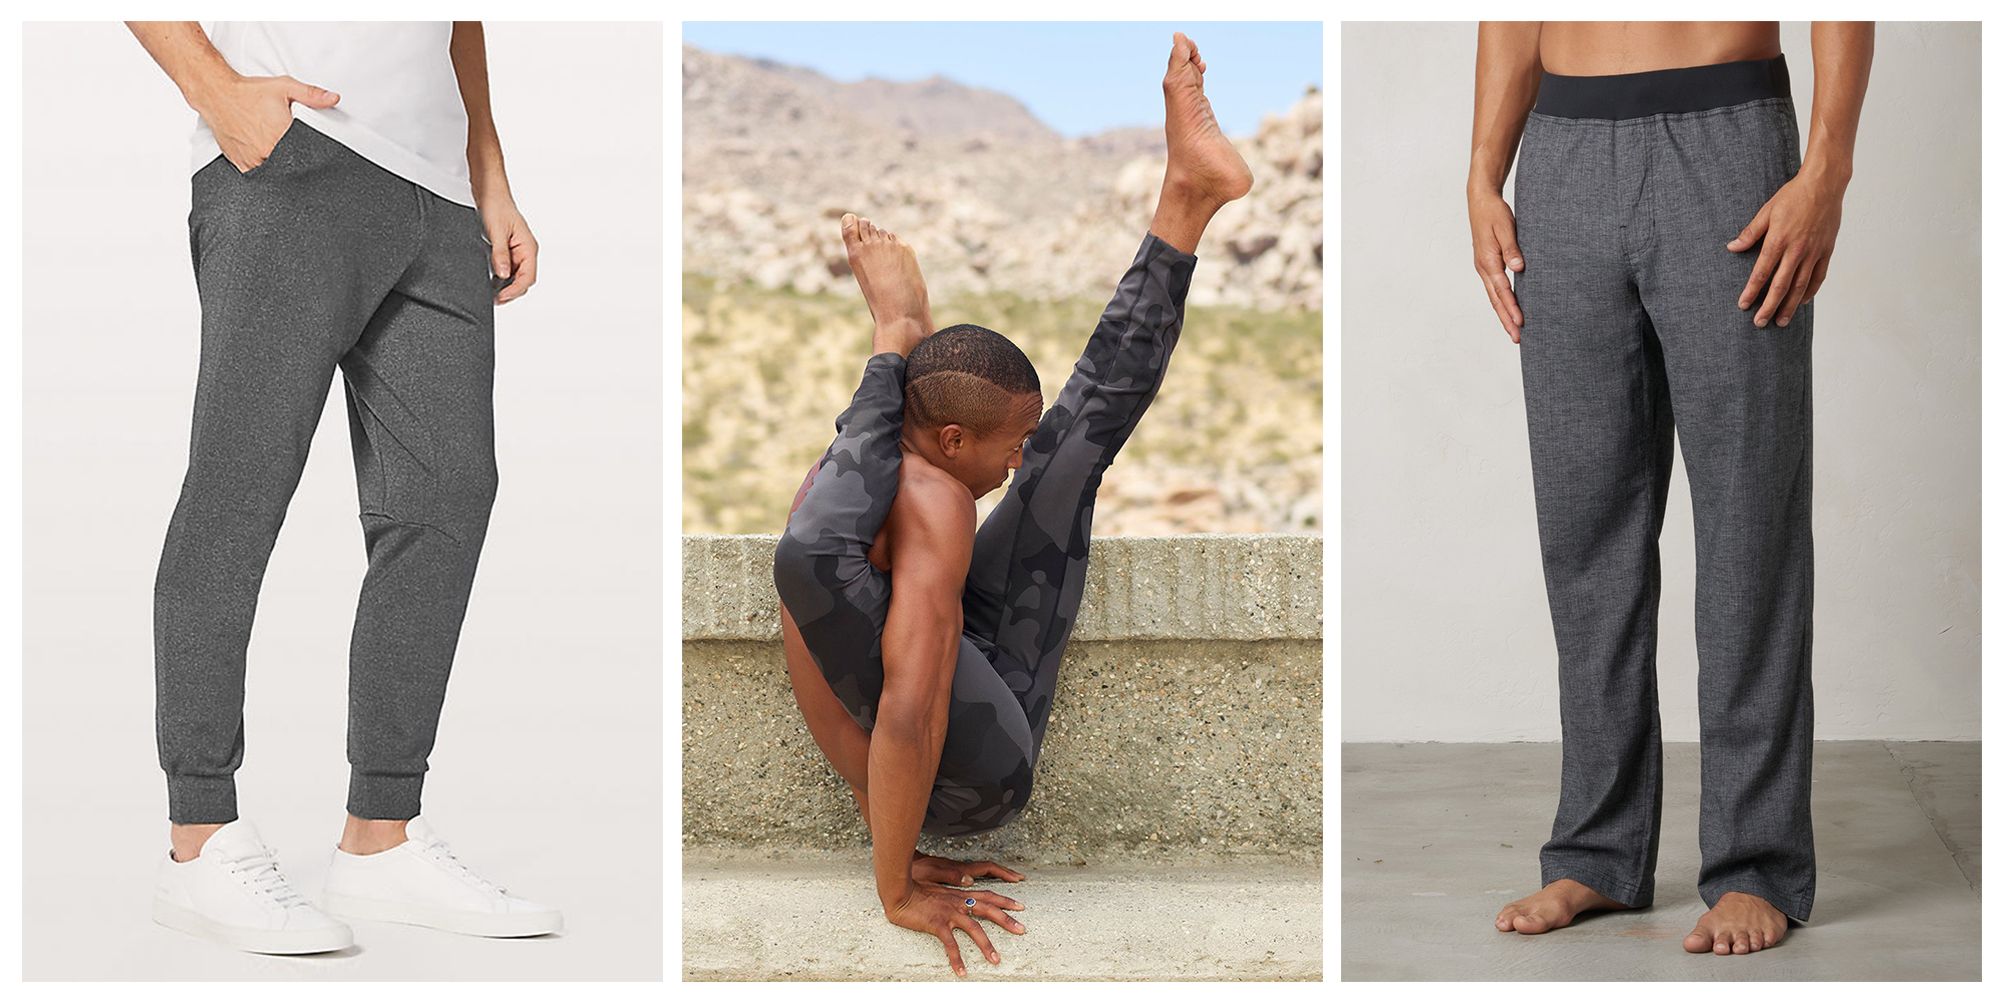 The Best Men's Yoga Pants for Comfortable Practice